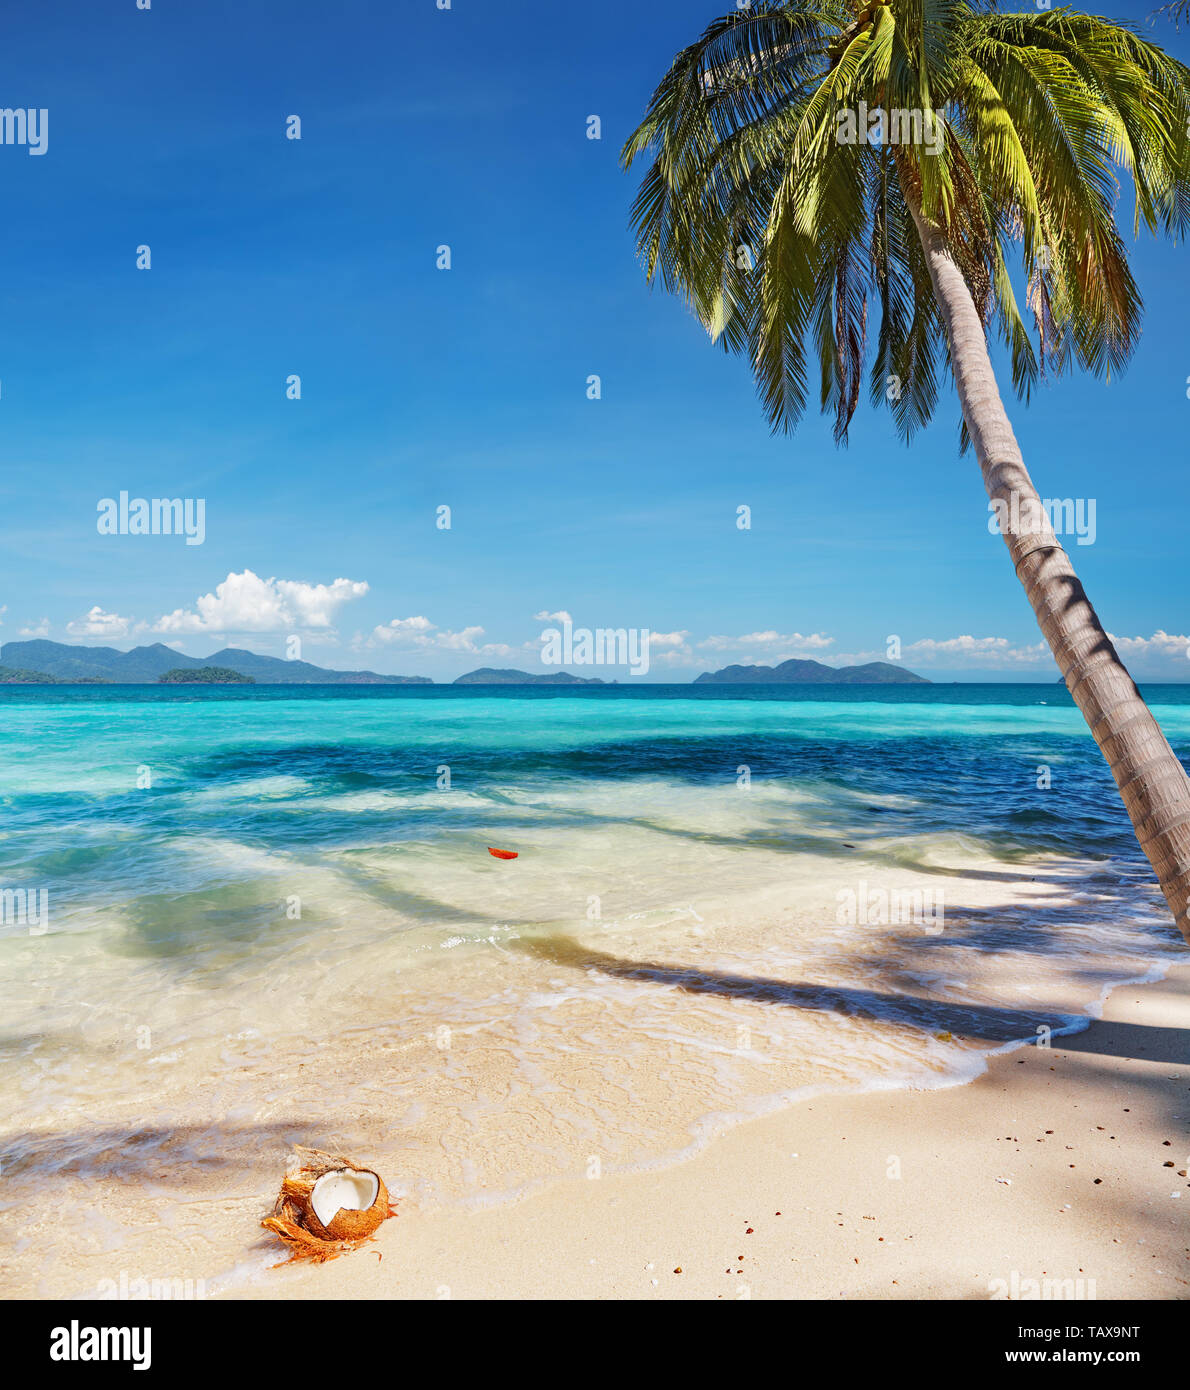 Tropical beach with coconut palms, Whai island, Thailand Stock Photo